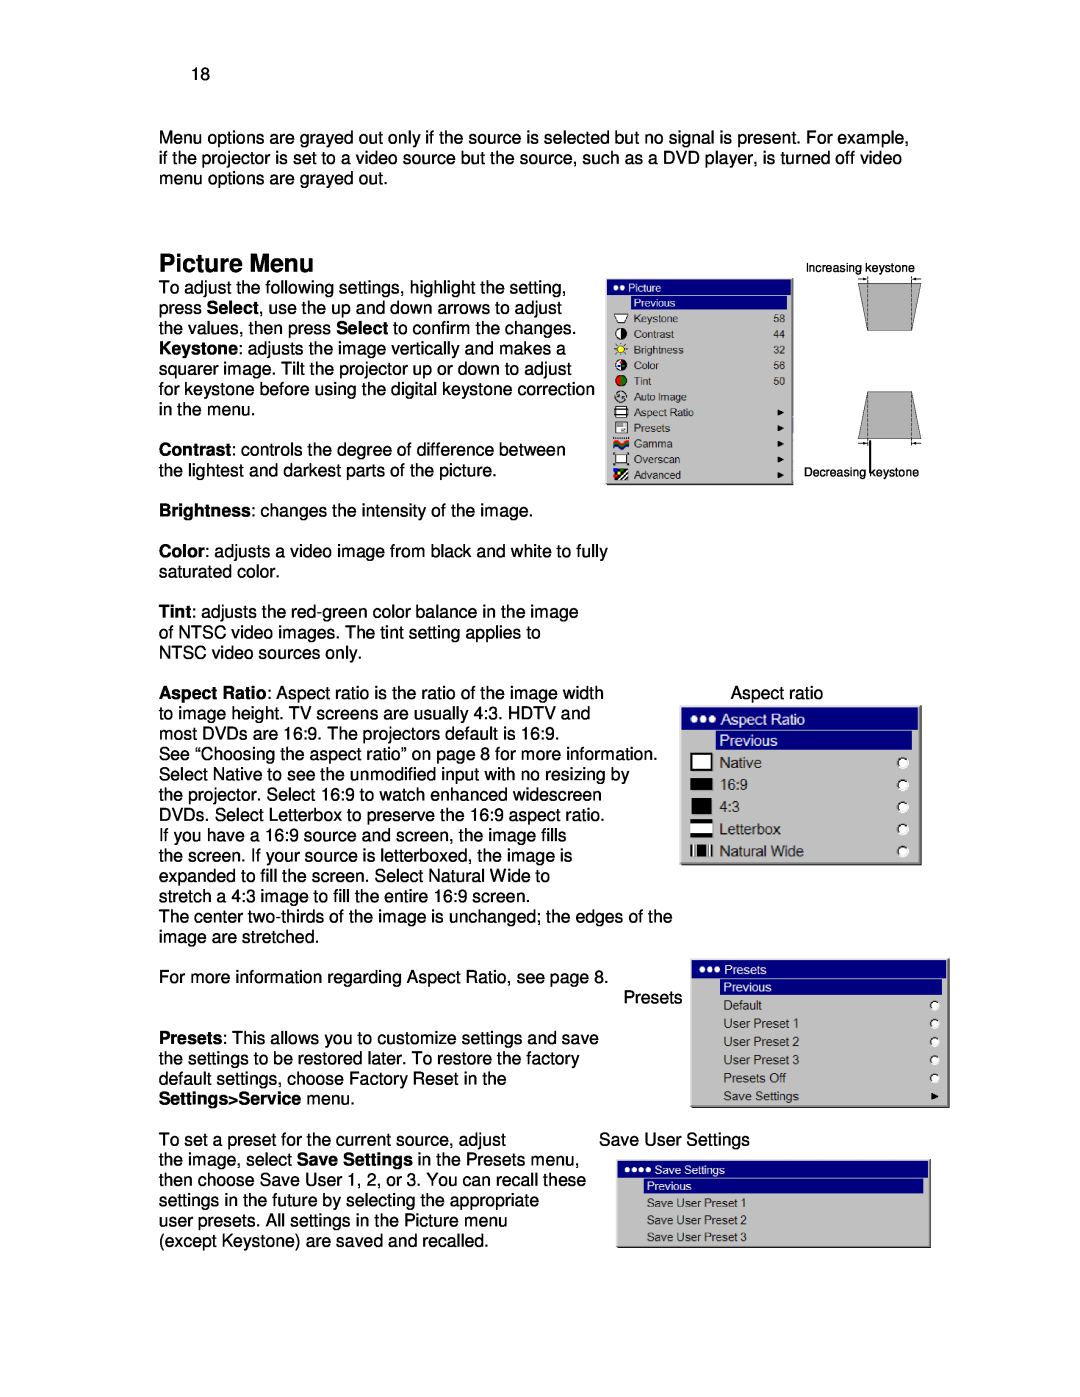 Knoll Systems HDP404 user manual Picture Menu, SettingsService menu 